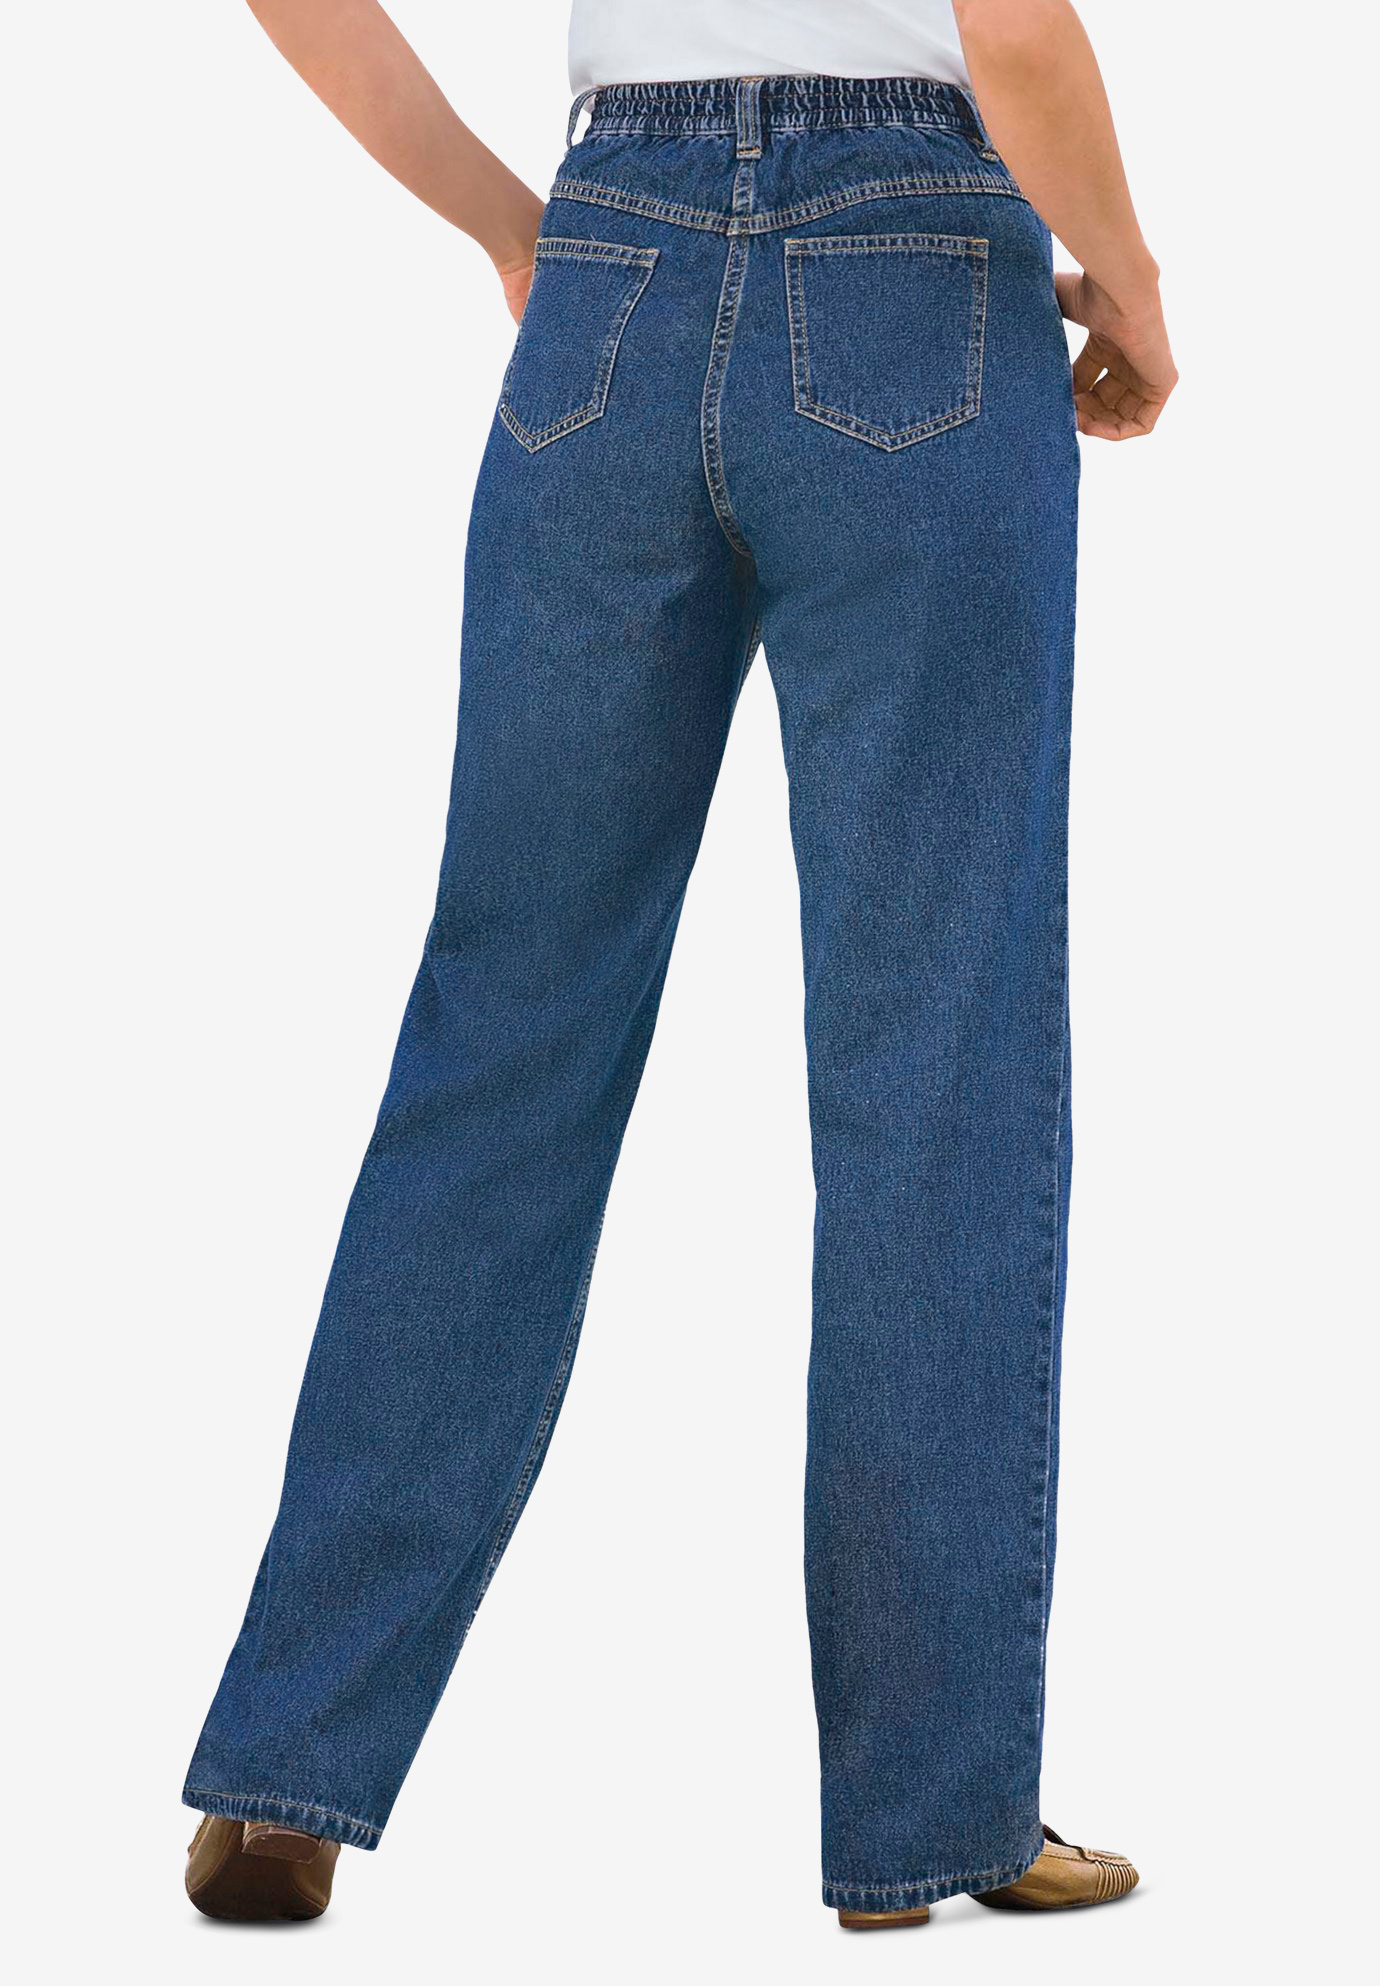 elastic jeans